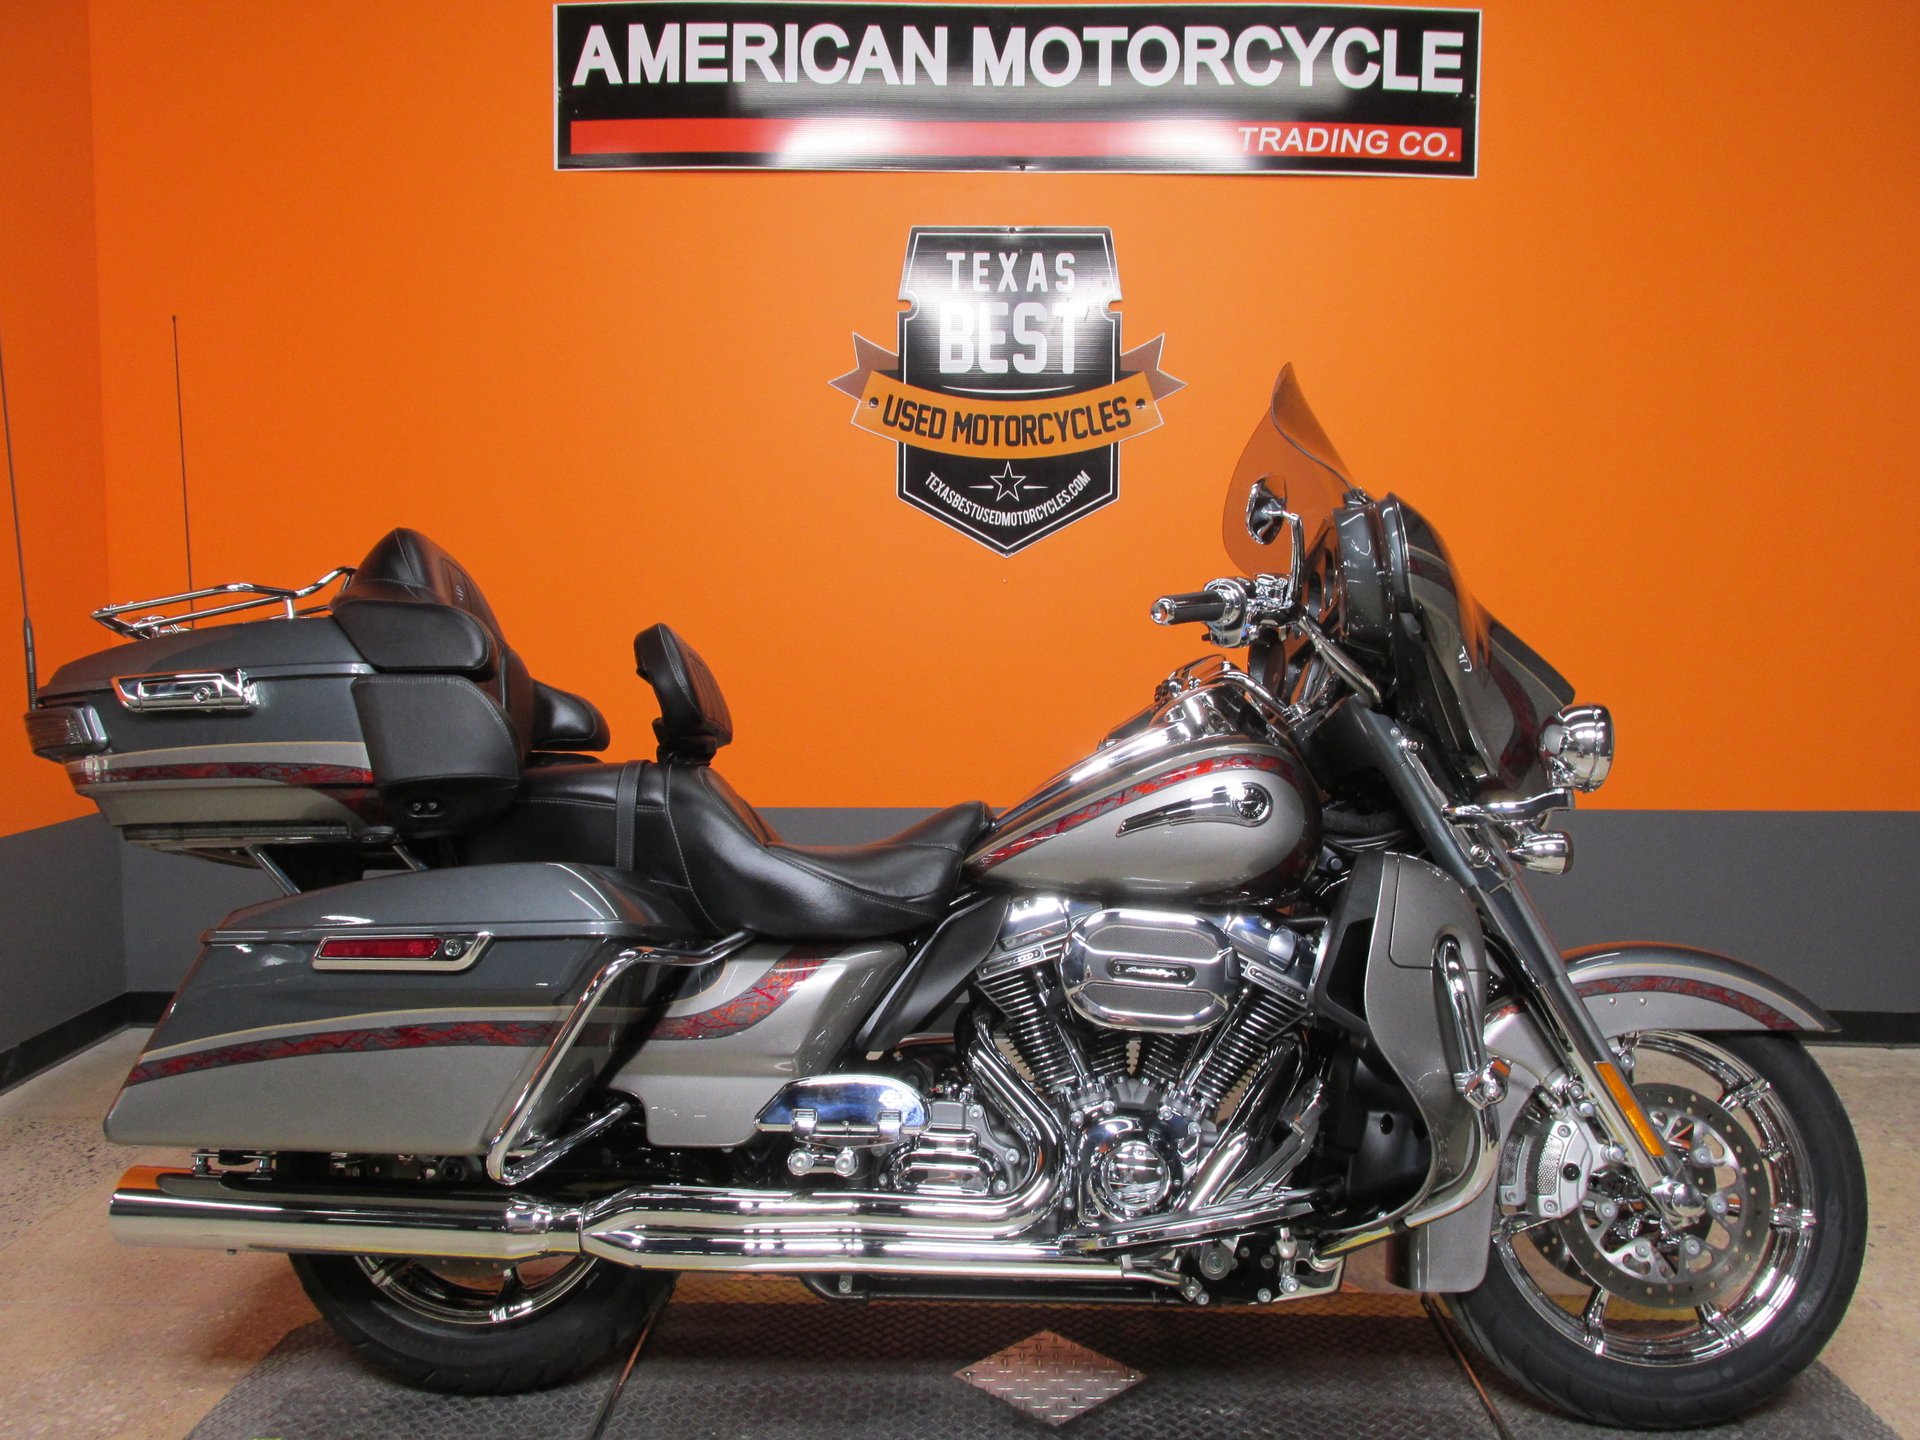 2016 Harley Davidson Cvo Ultra Limited American Motorcycle Trading Company Used Harley Davidson Motorcycles